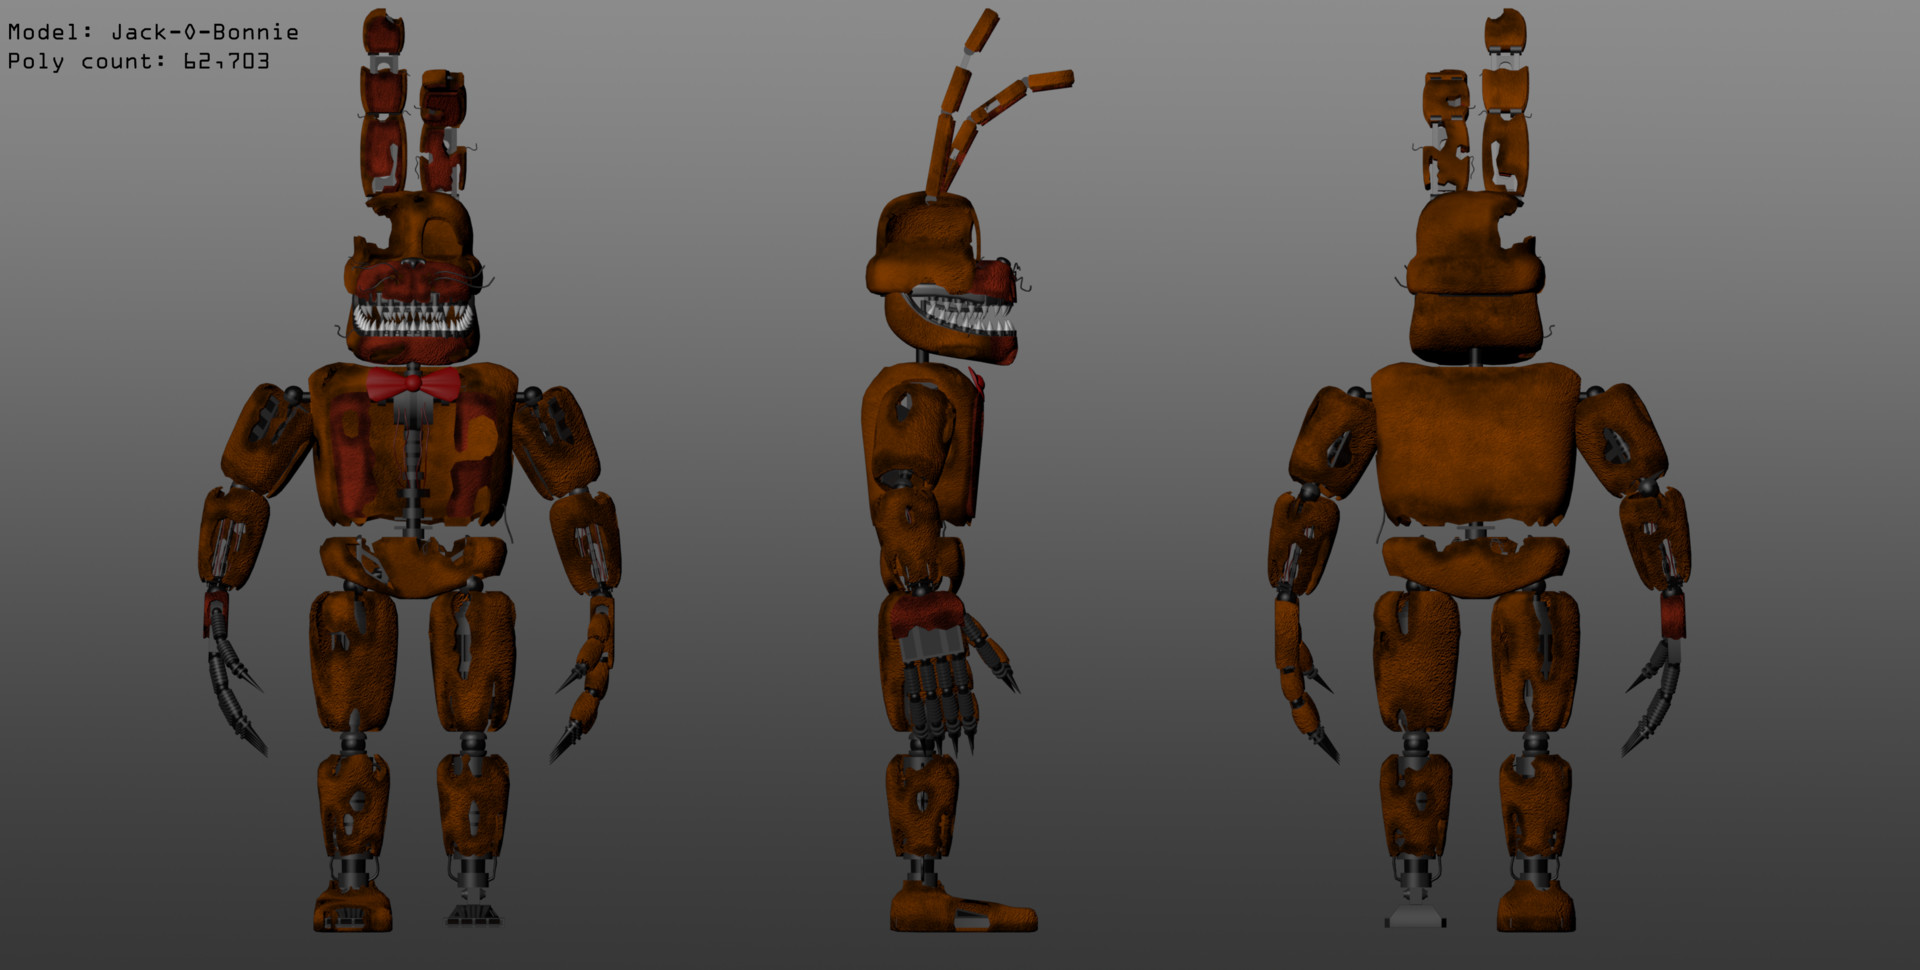 Thomas Honeybell - Five Nights at Freddy's 4 Fan-Made Nightmare 3D Models